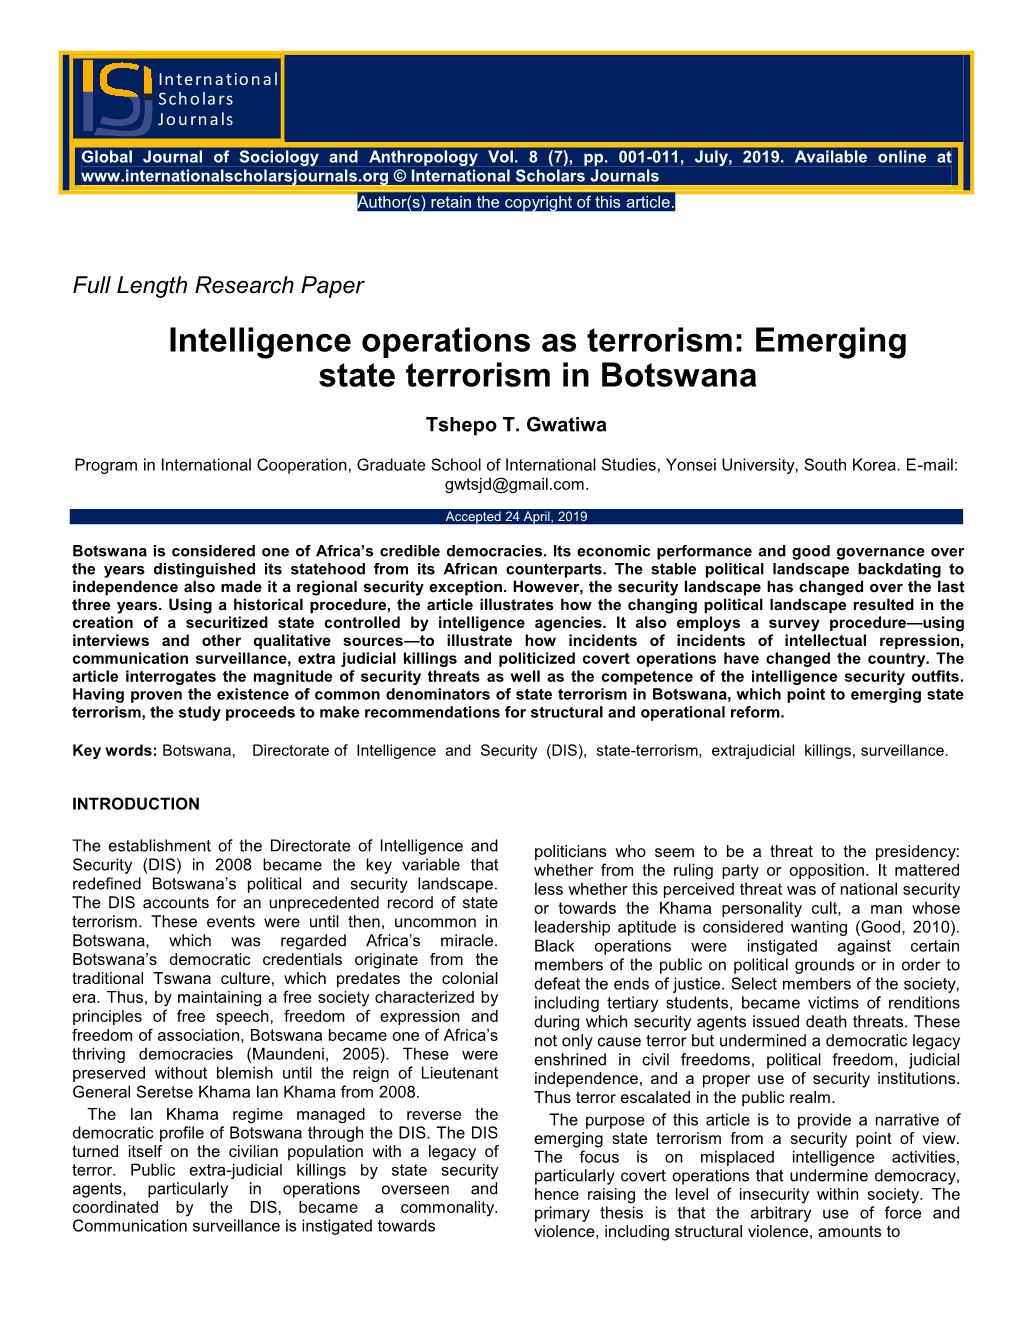 Intelligence Operations As Terrorism: Emerging State Terrorism in Botswana